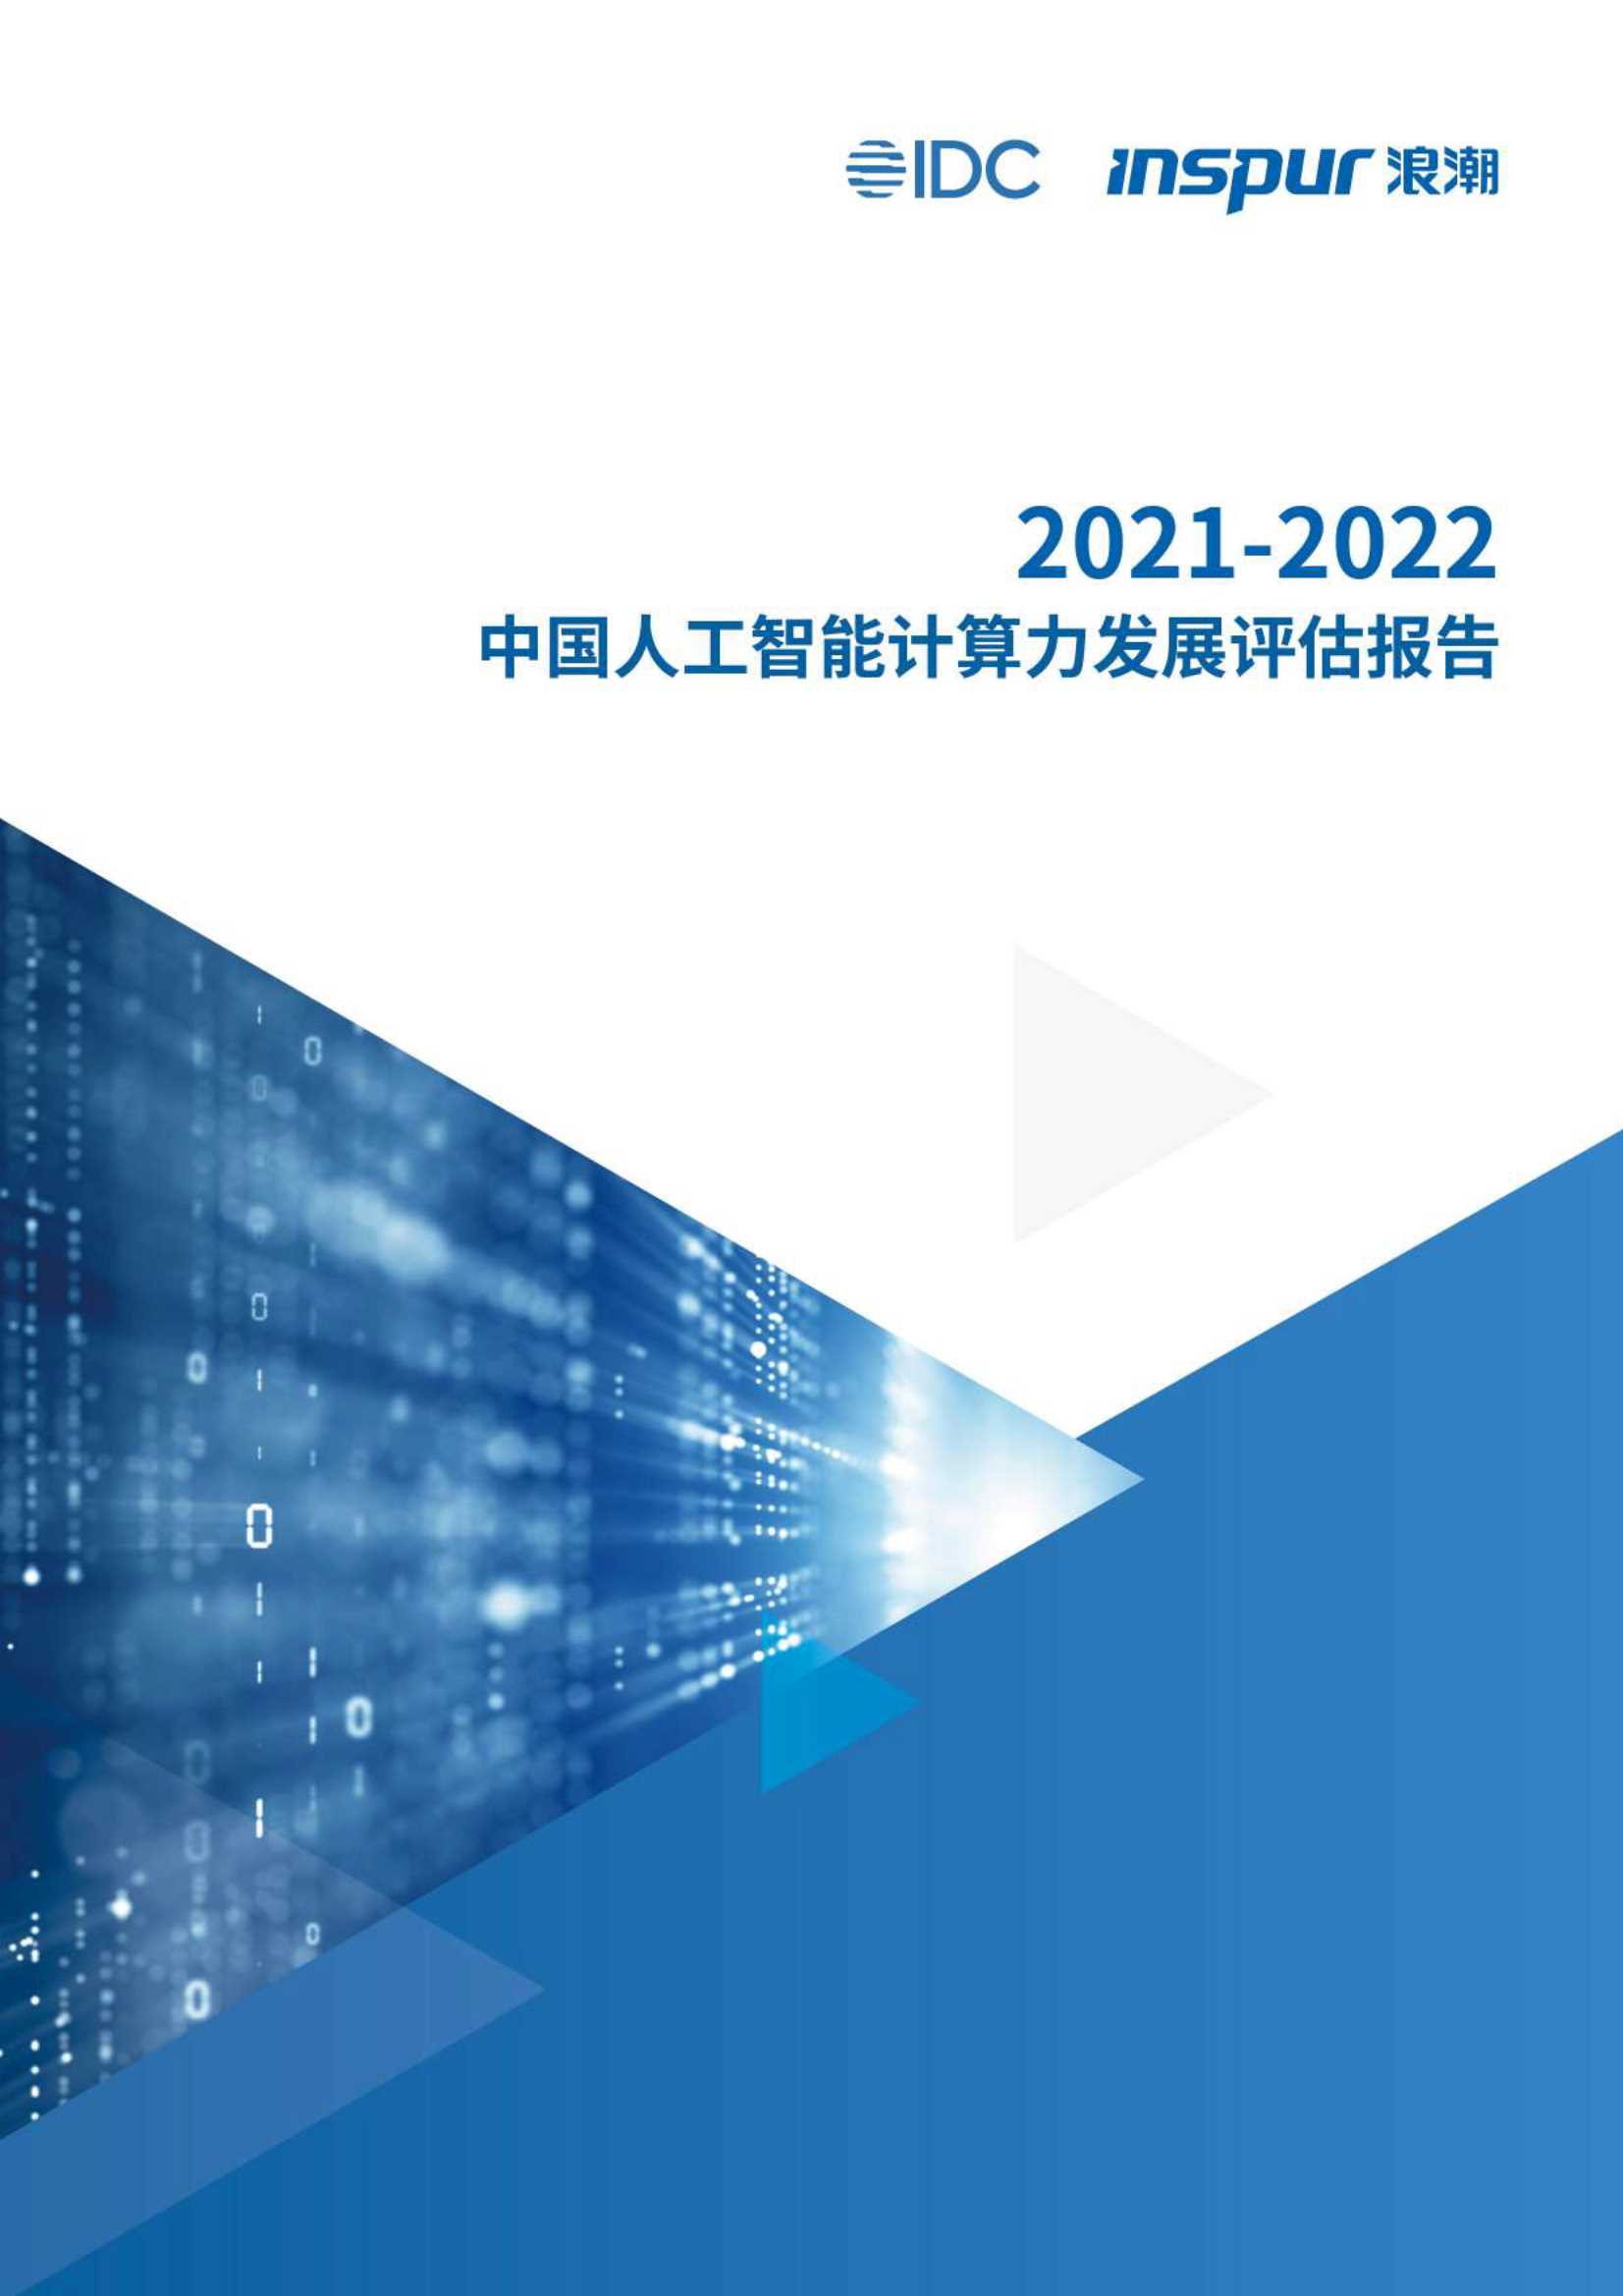 IDC&浪潮集团-2021~2022中国人工智能计算力发展评估报告-2021.11-39页